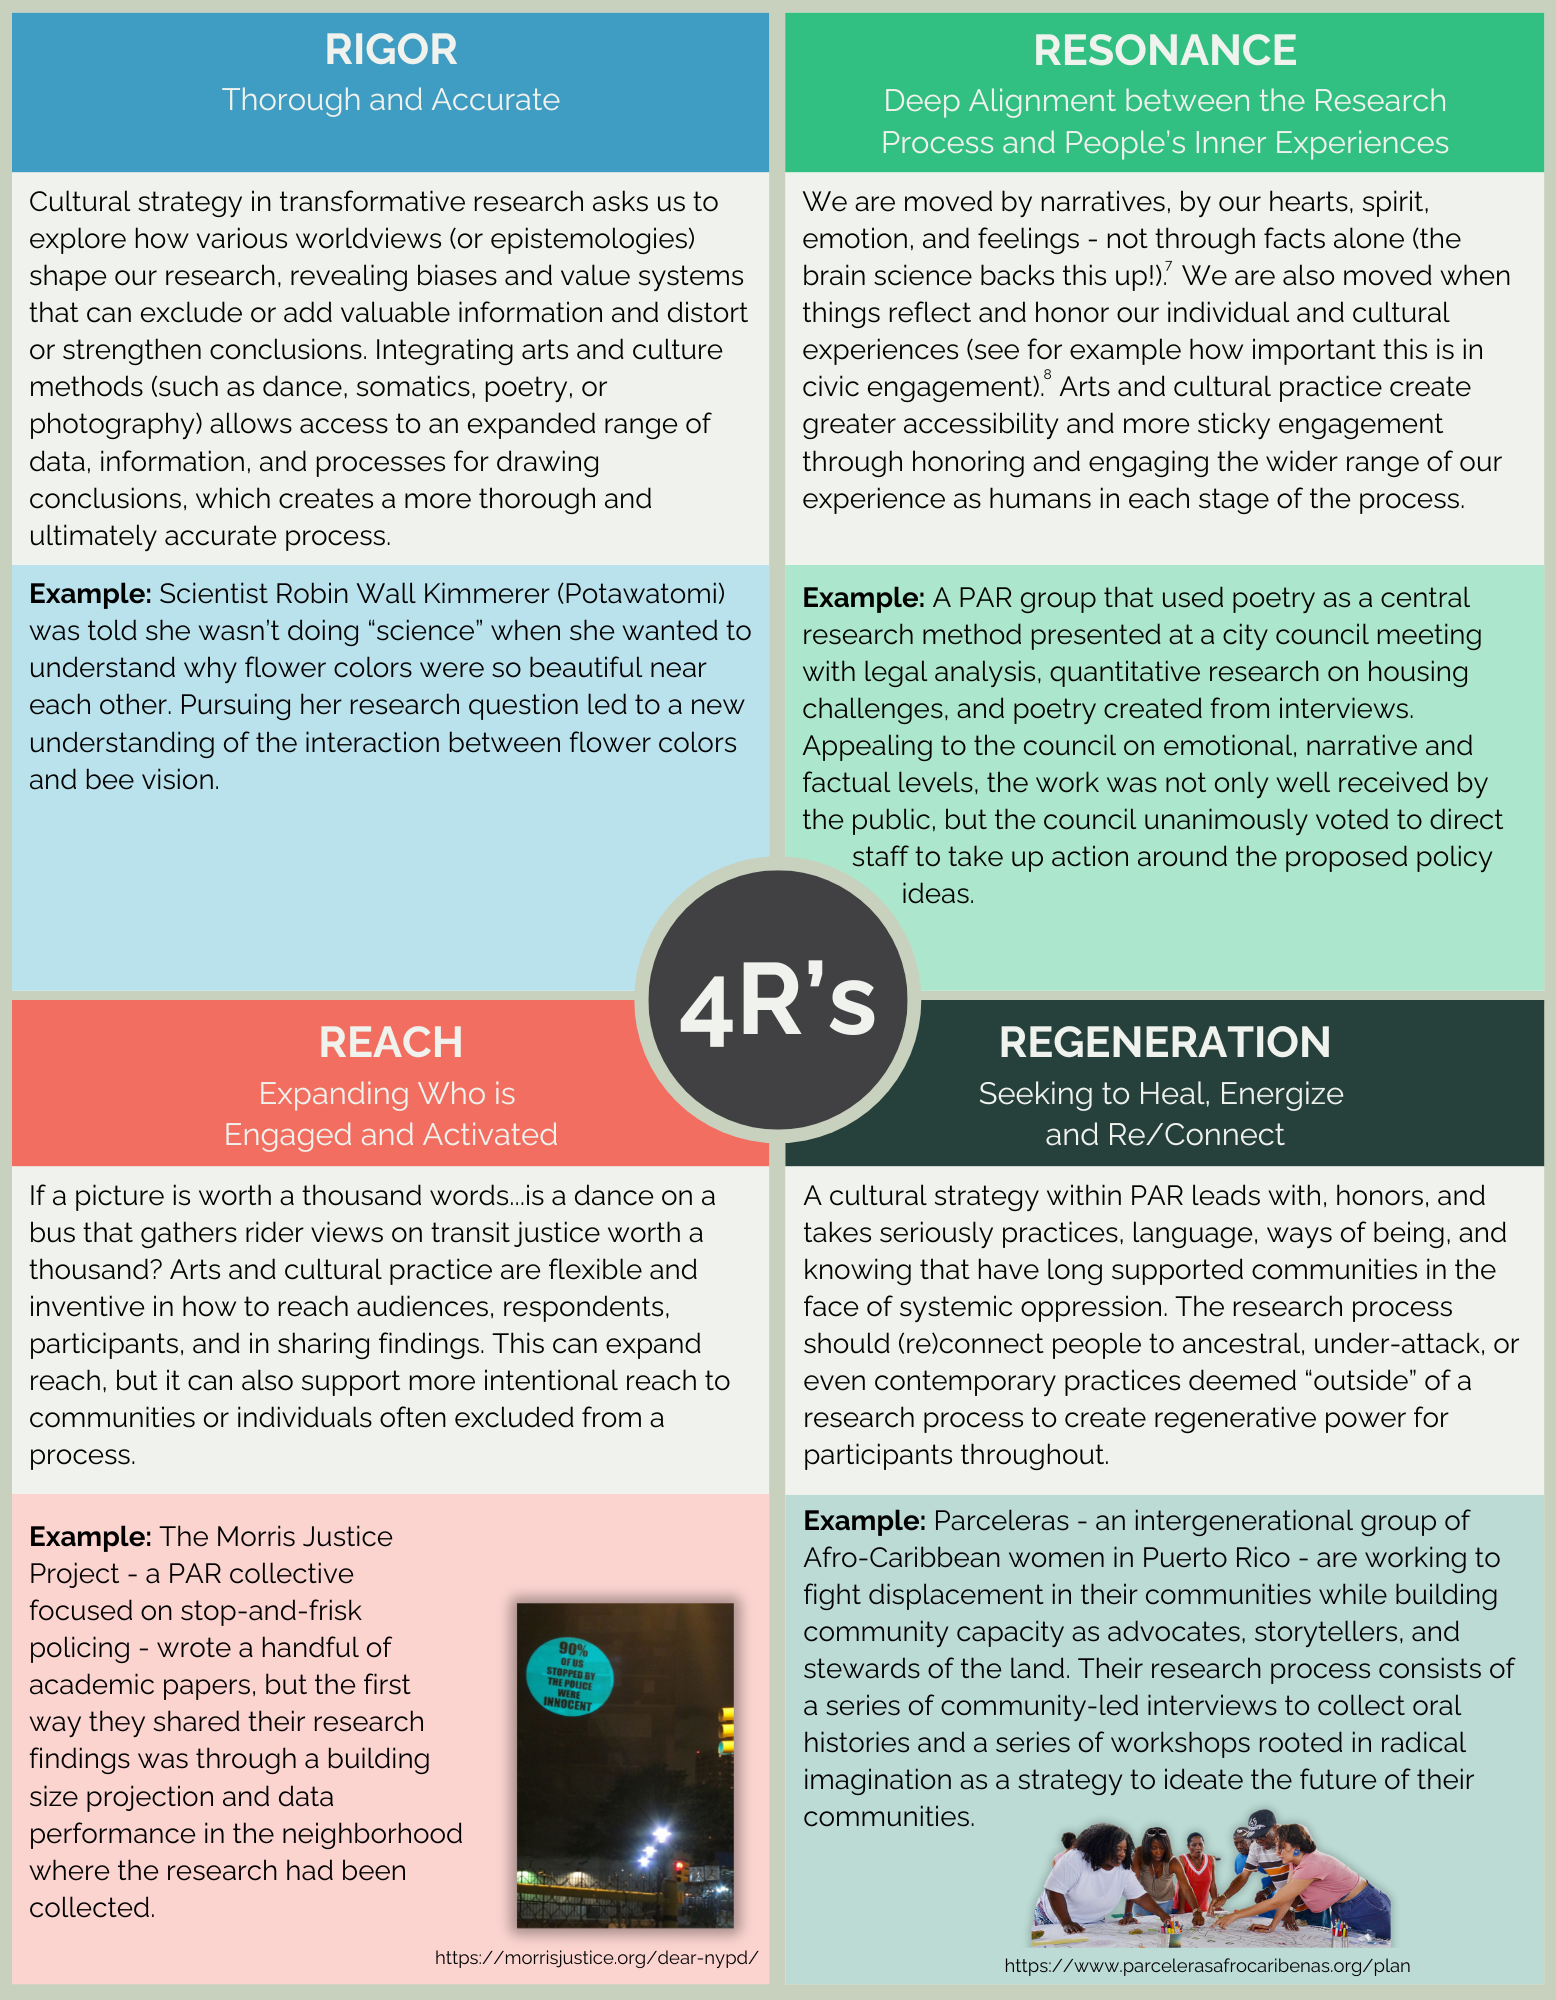 4 R's framework: rigor, resonance, reach, and regeneration